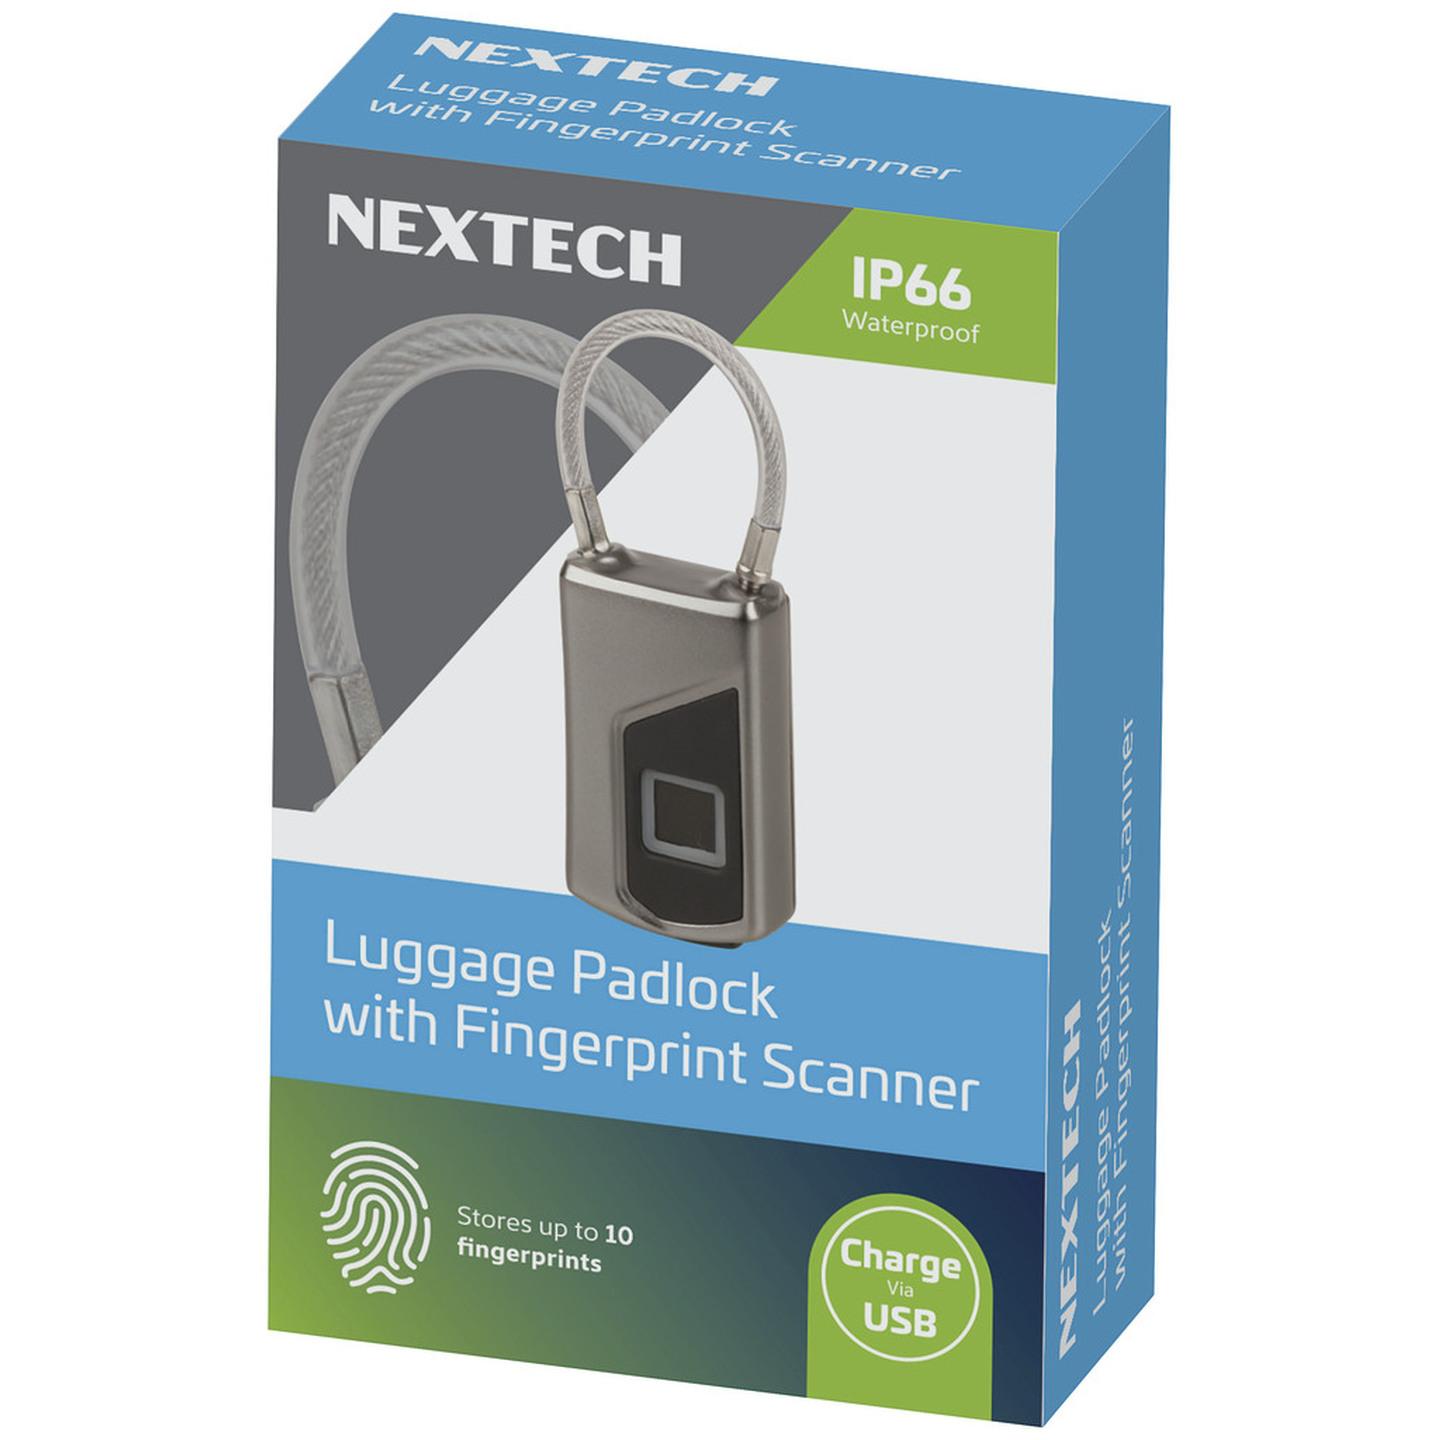 Luggage Padlock with Fingerprint Scanner